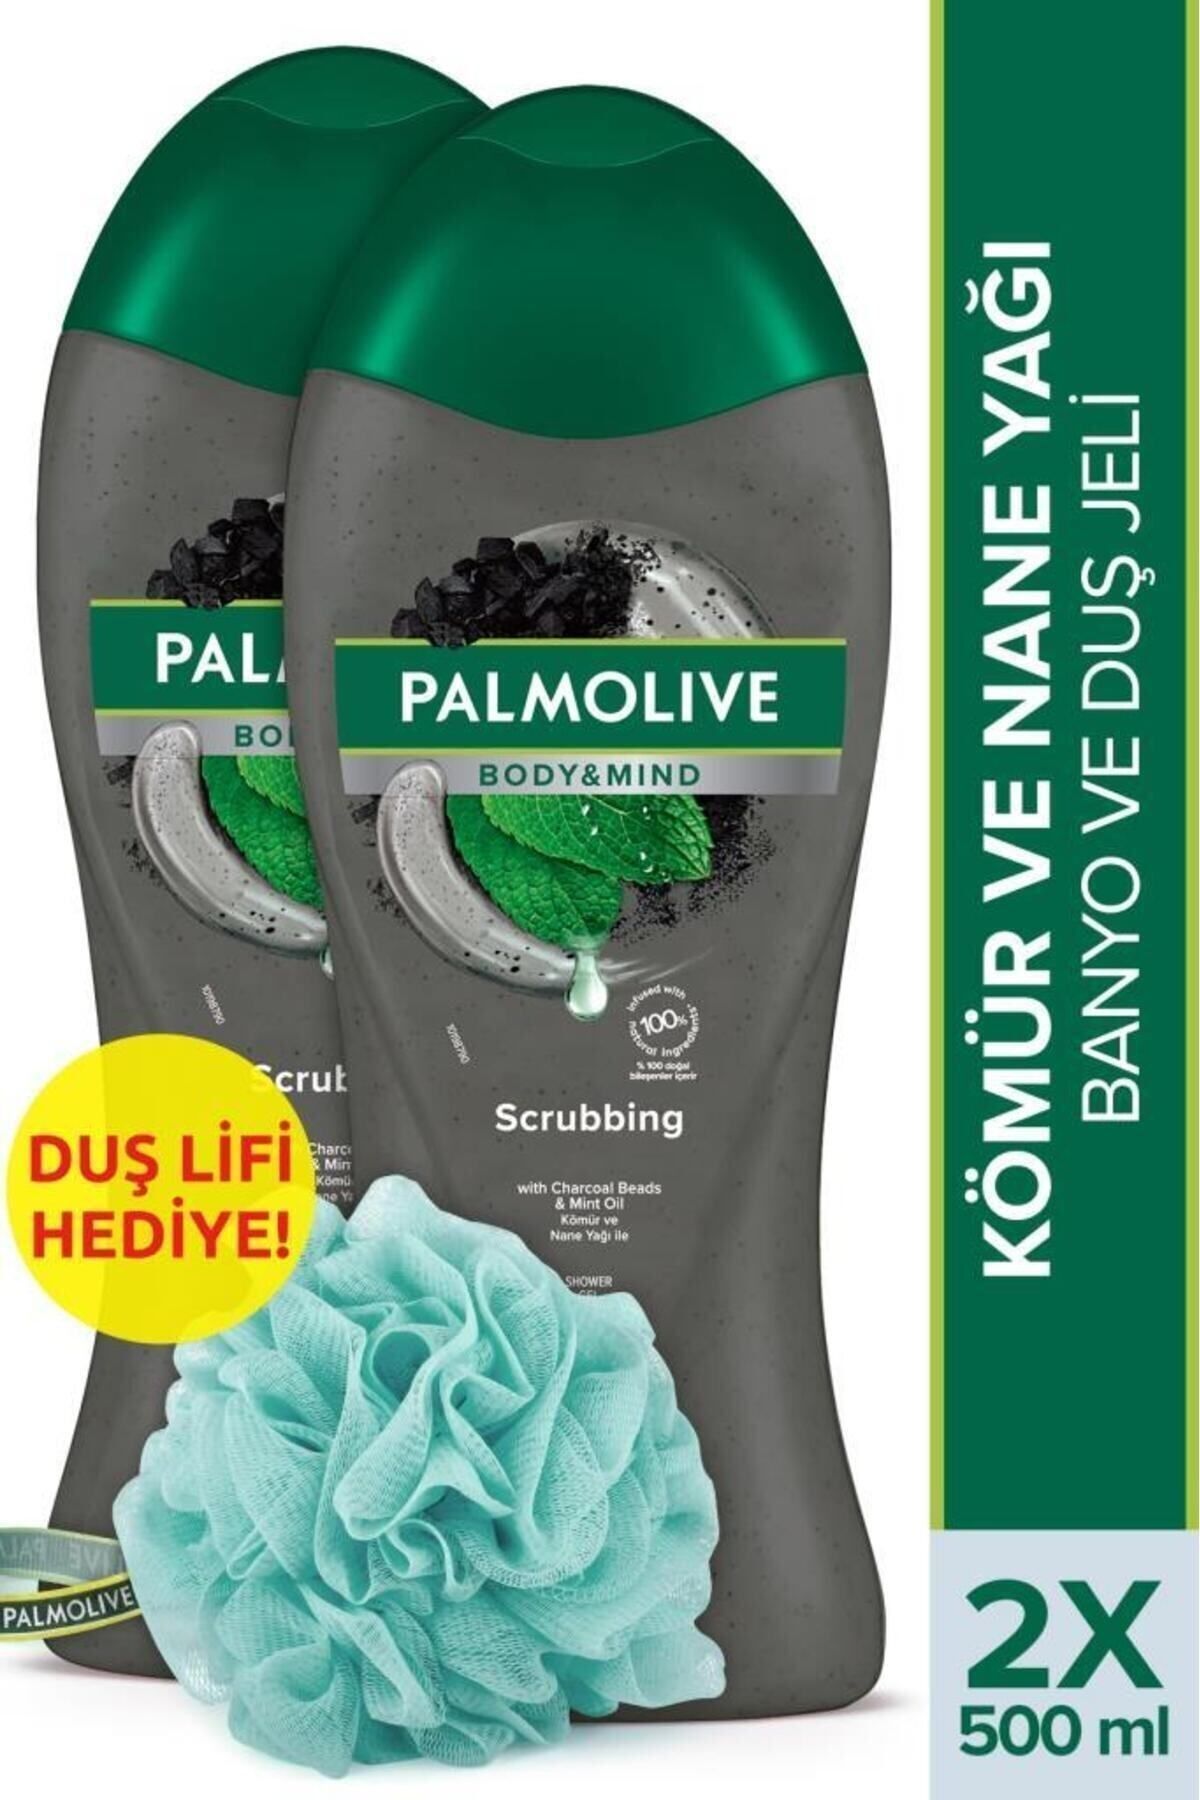 Palmolive  Body & Mind Kömür Ve Nane Yağı Banyo Ve Duş Jeli 500 ml x 2 Adet + Duş Lifi Hediye